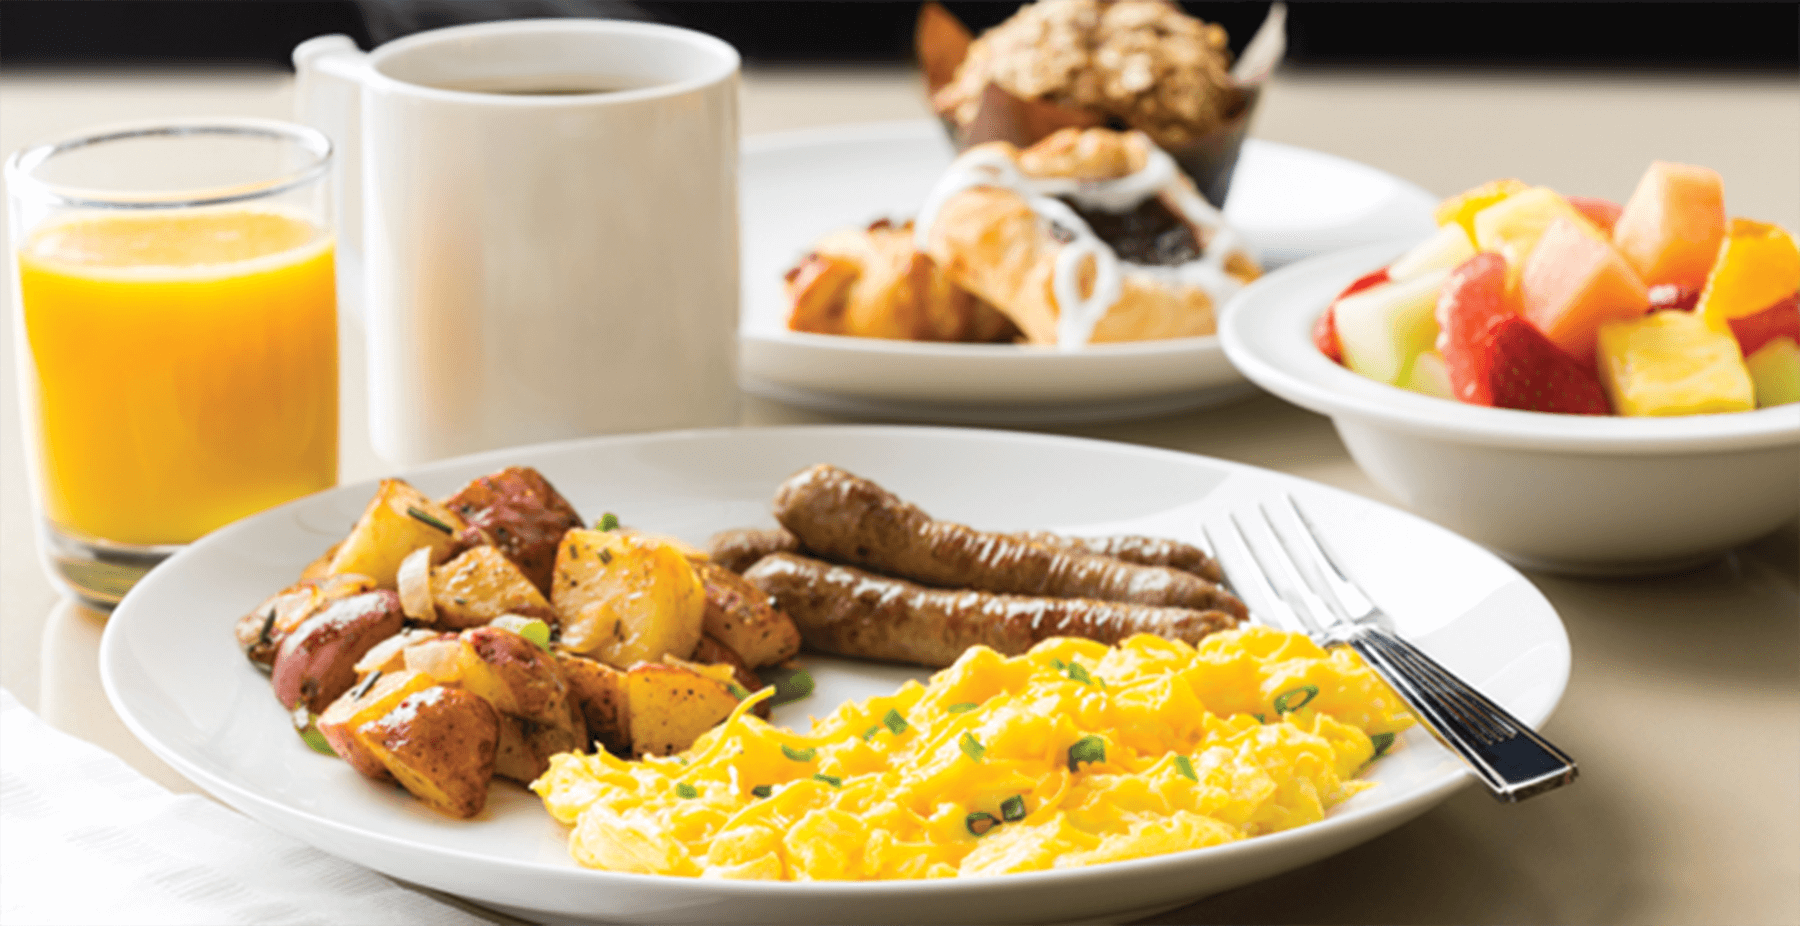  Homewood Suites complimentary breakfast plate 